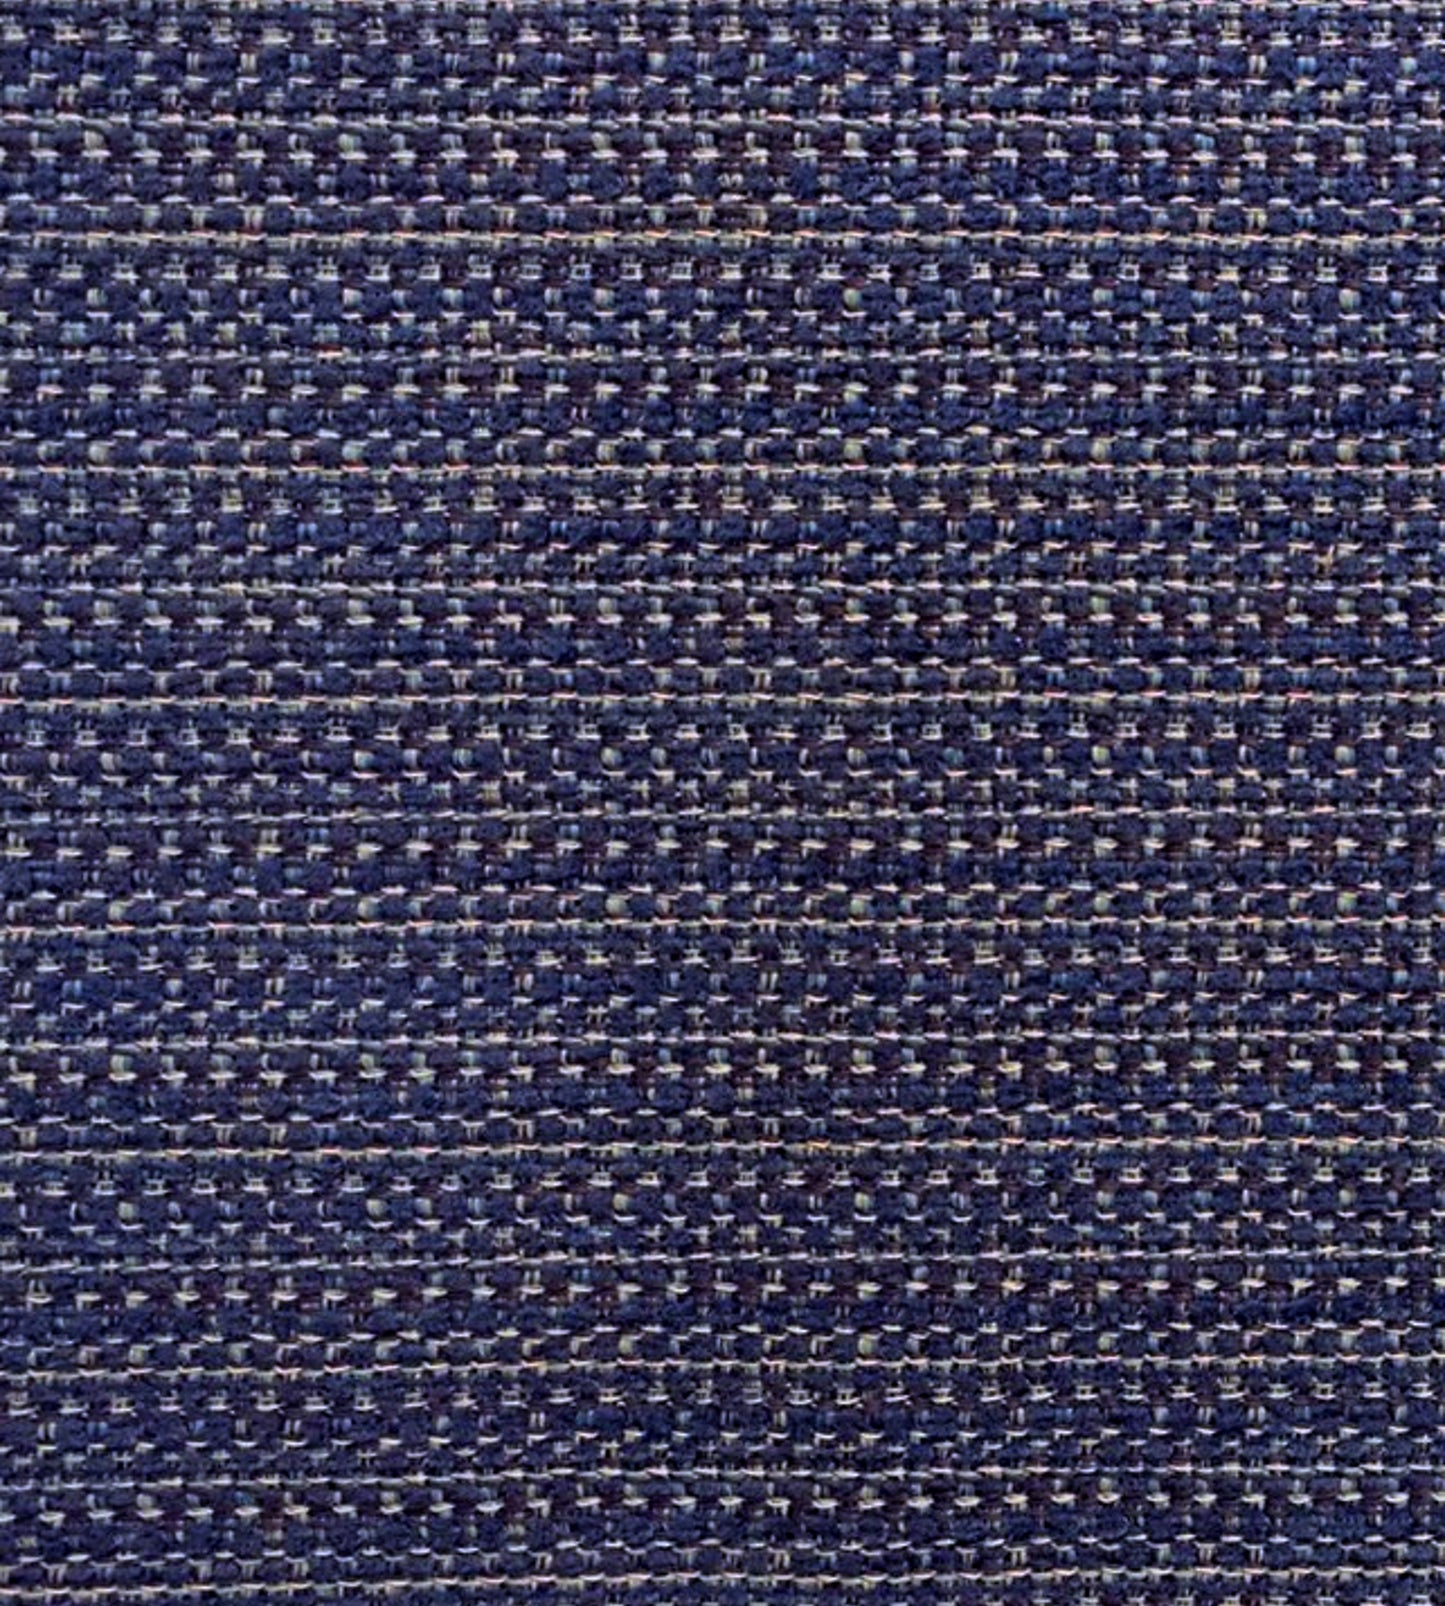 Purchase Scalamandre Fabric Item SC 000527061, Summer Tweed Indigo 1